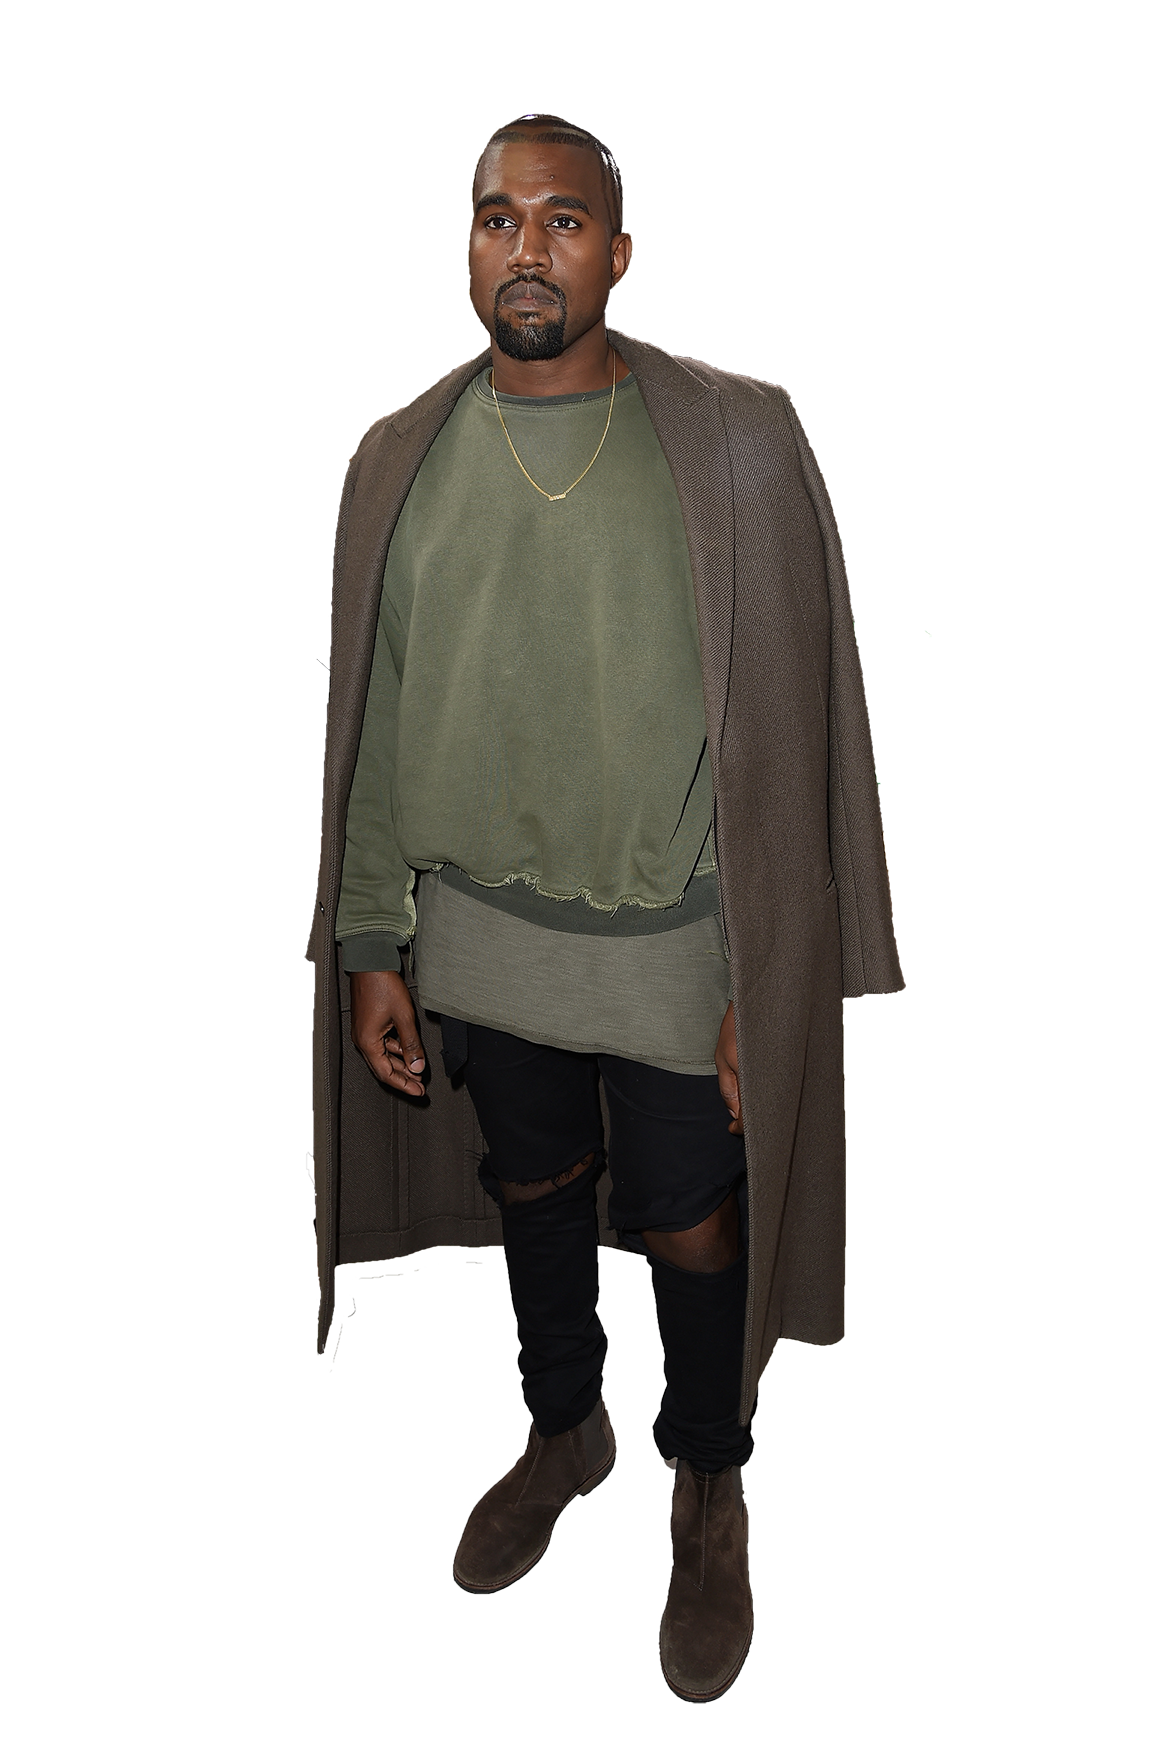 Rapper Kanye West PNG gambar Transparan